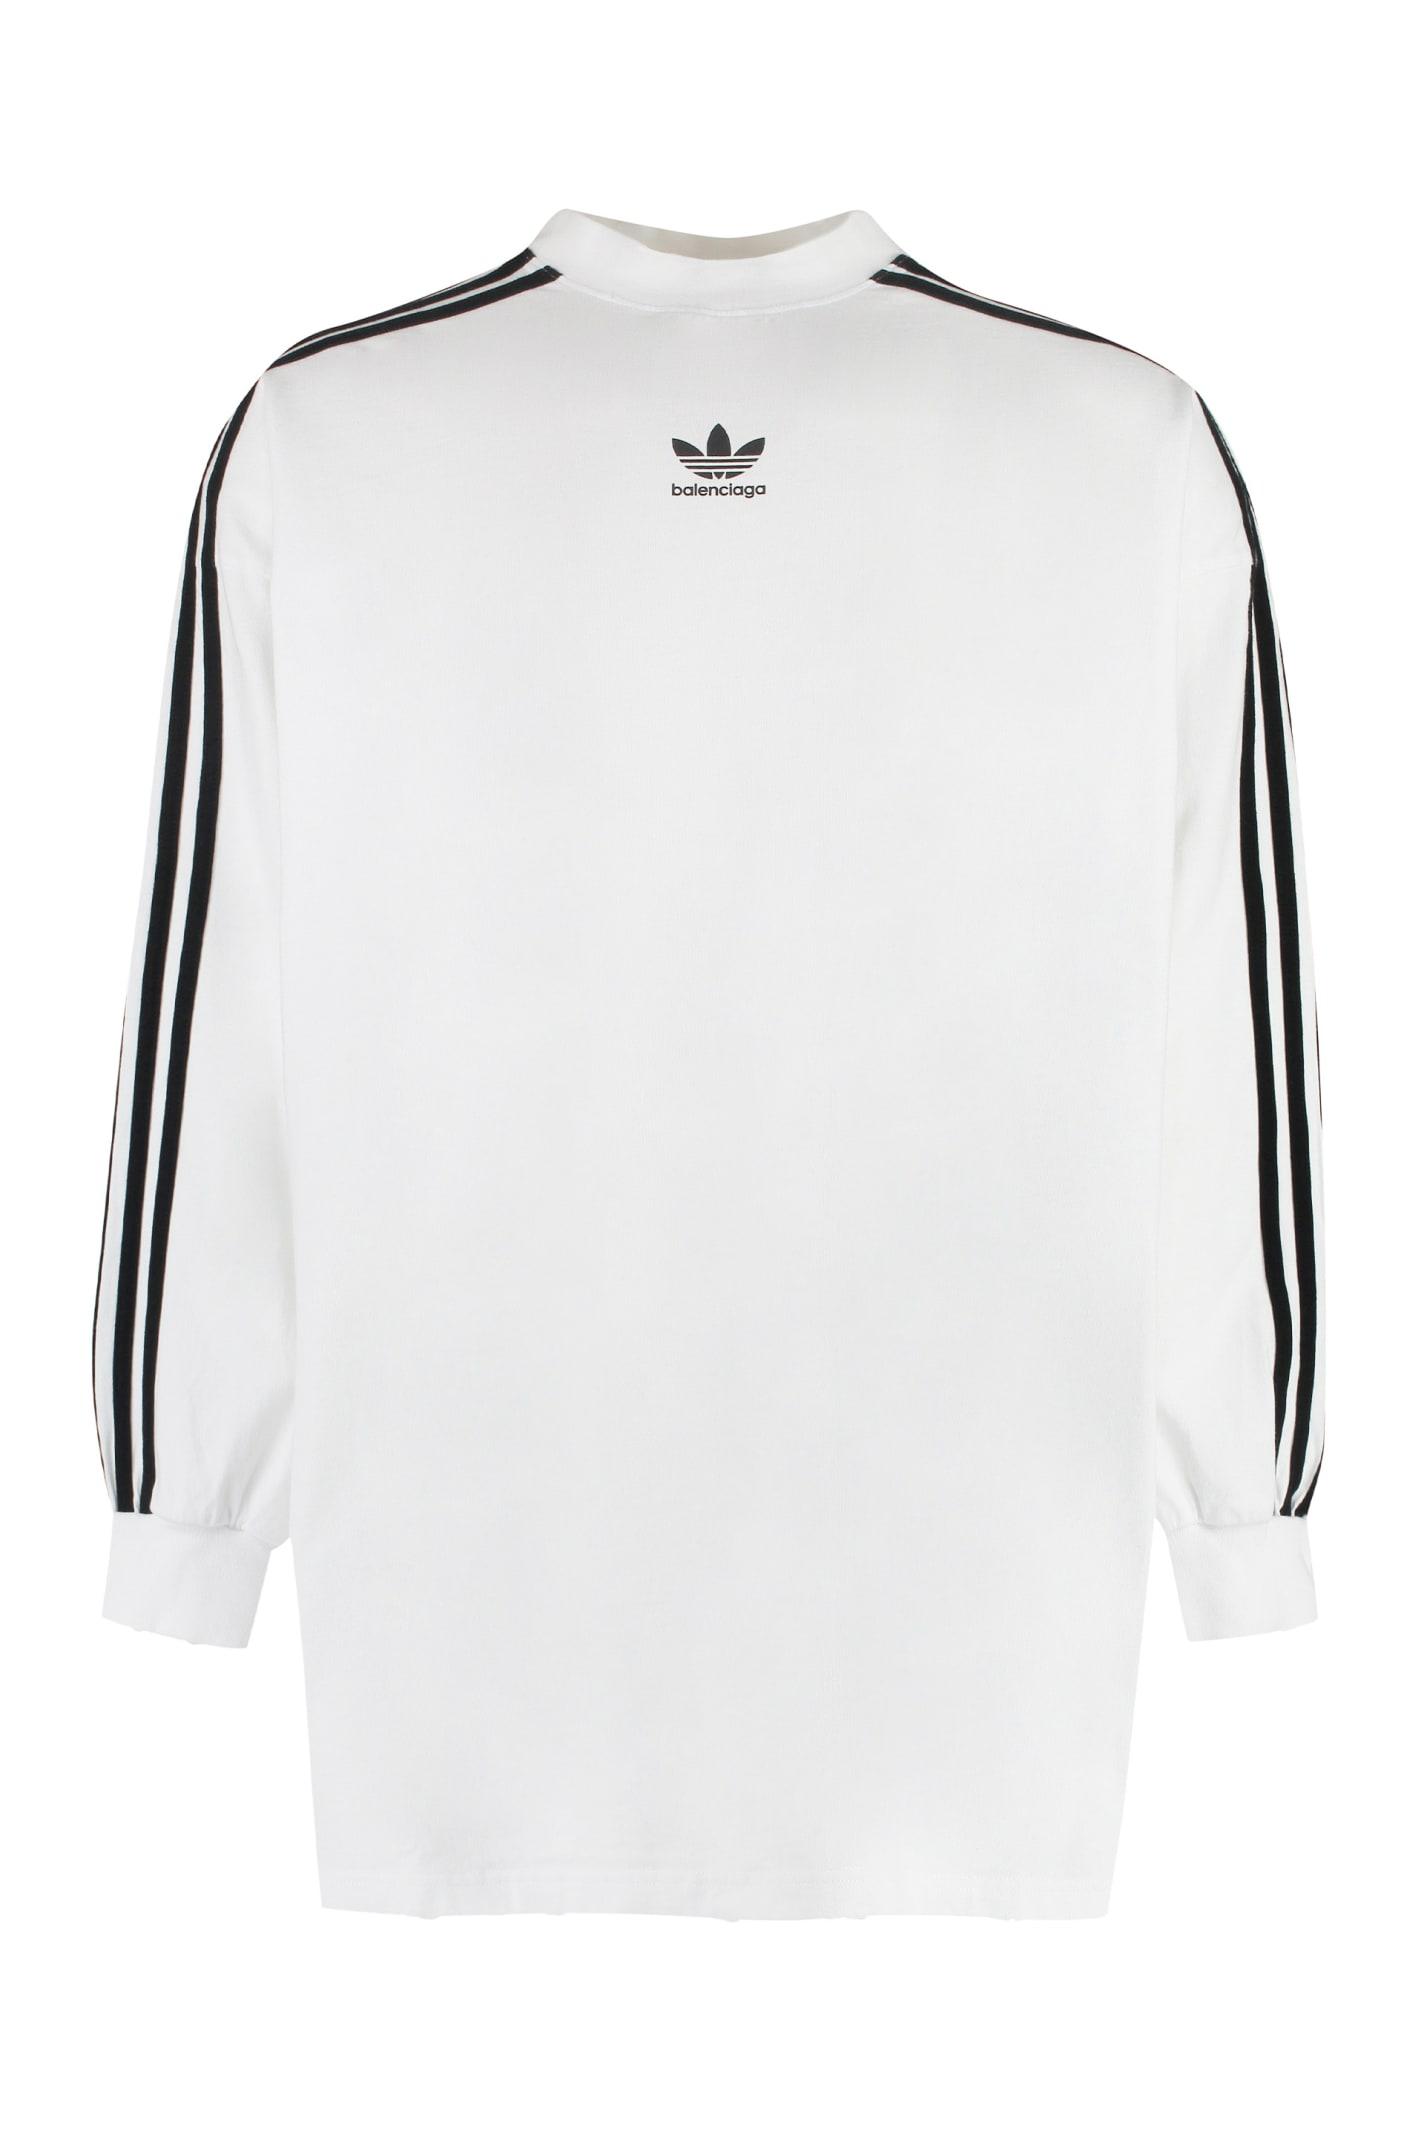 Balenciaga X Adidas - Long Sleeve Cotton T-shirt in White for Men Lyst